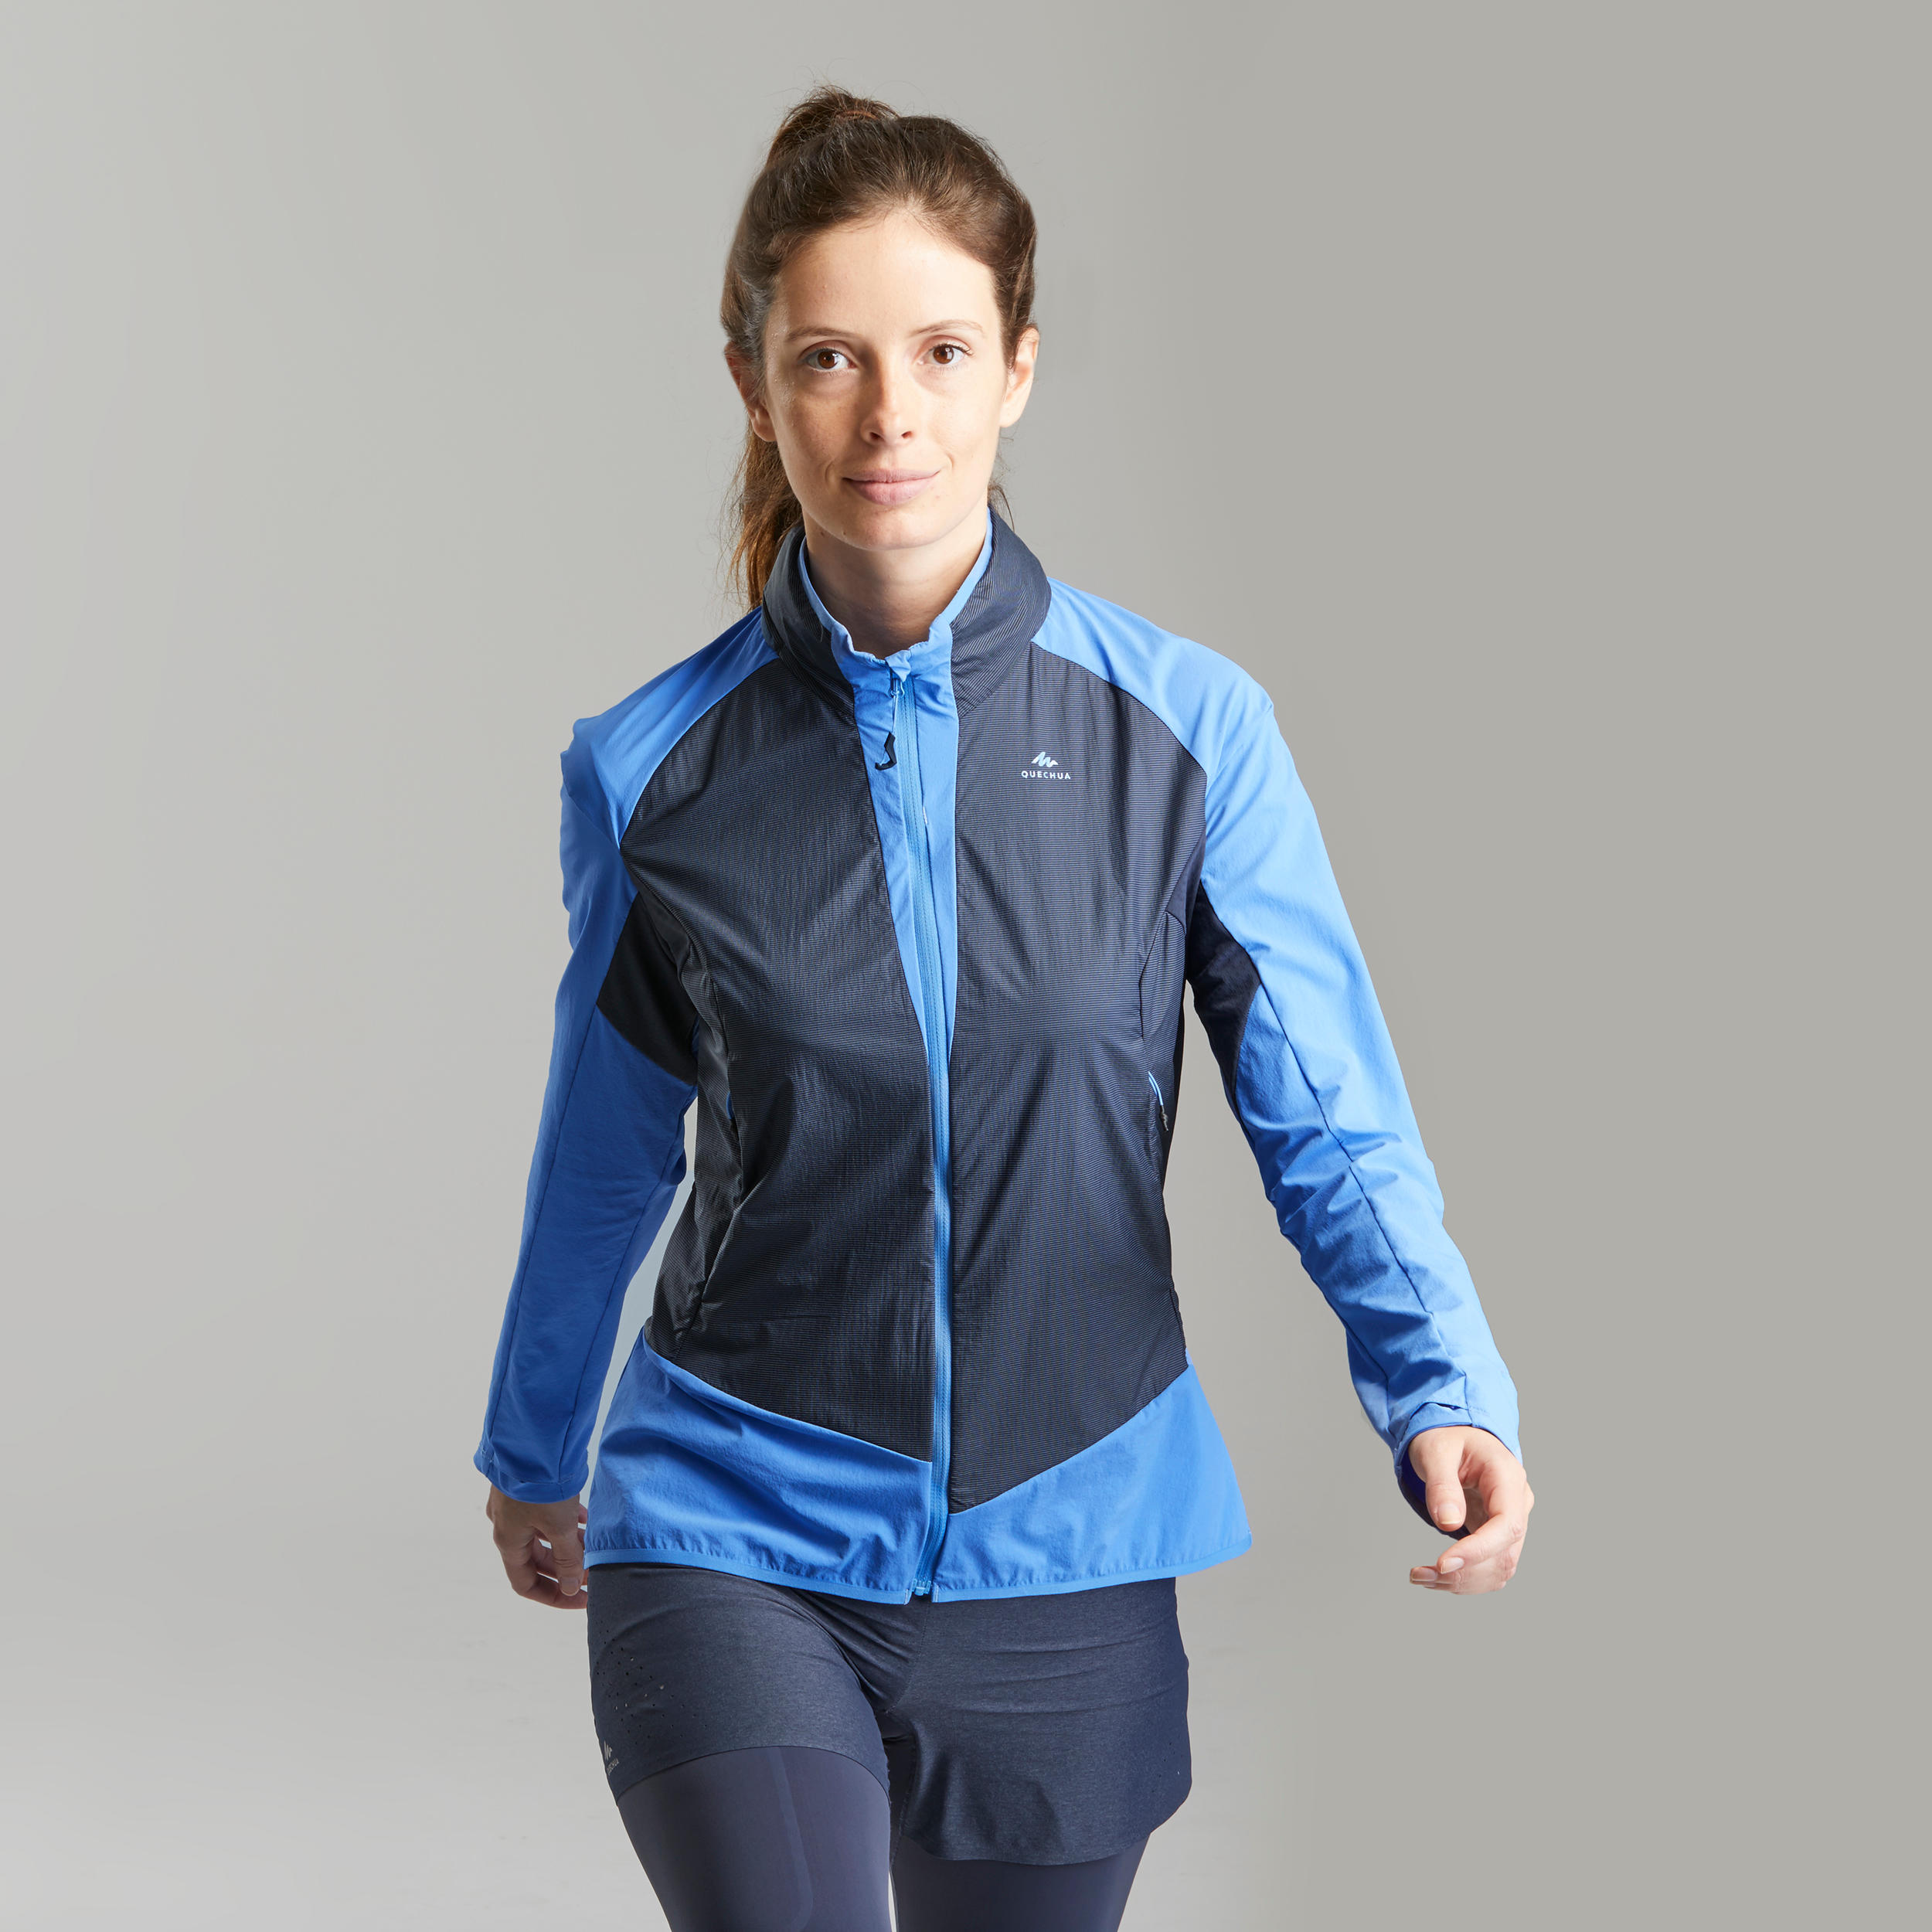 Women’s Warm Jacket For Fast Hiking FH 900 Hybrid - Blue 2/7